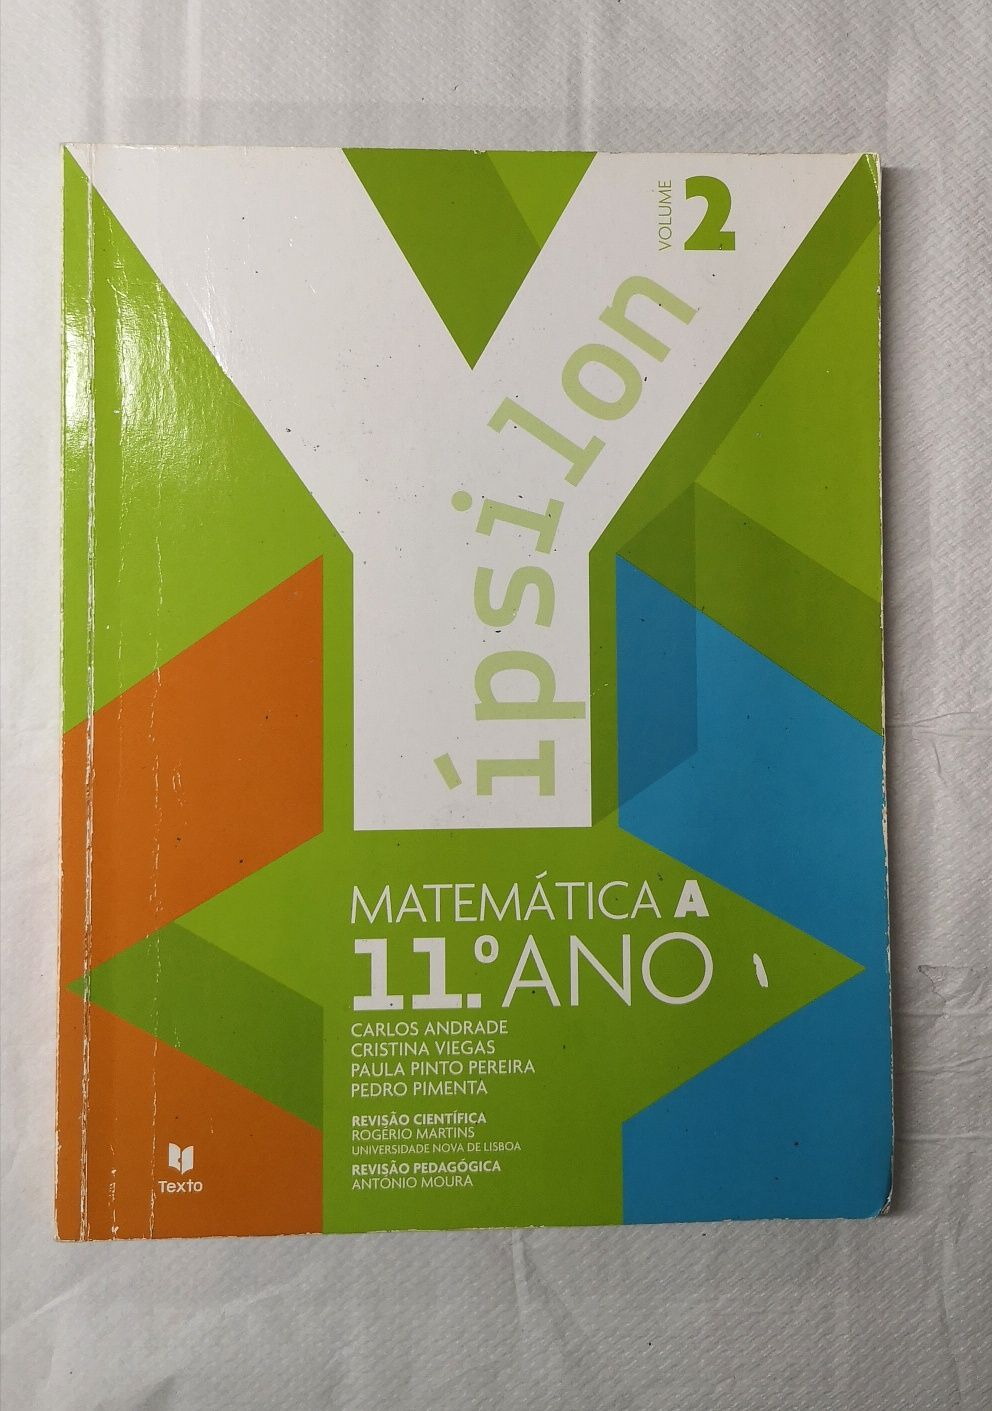 "Yípsilon" Matemática 11ano